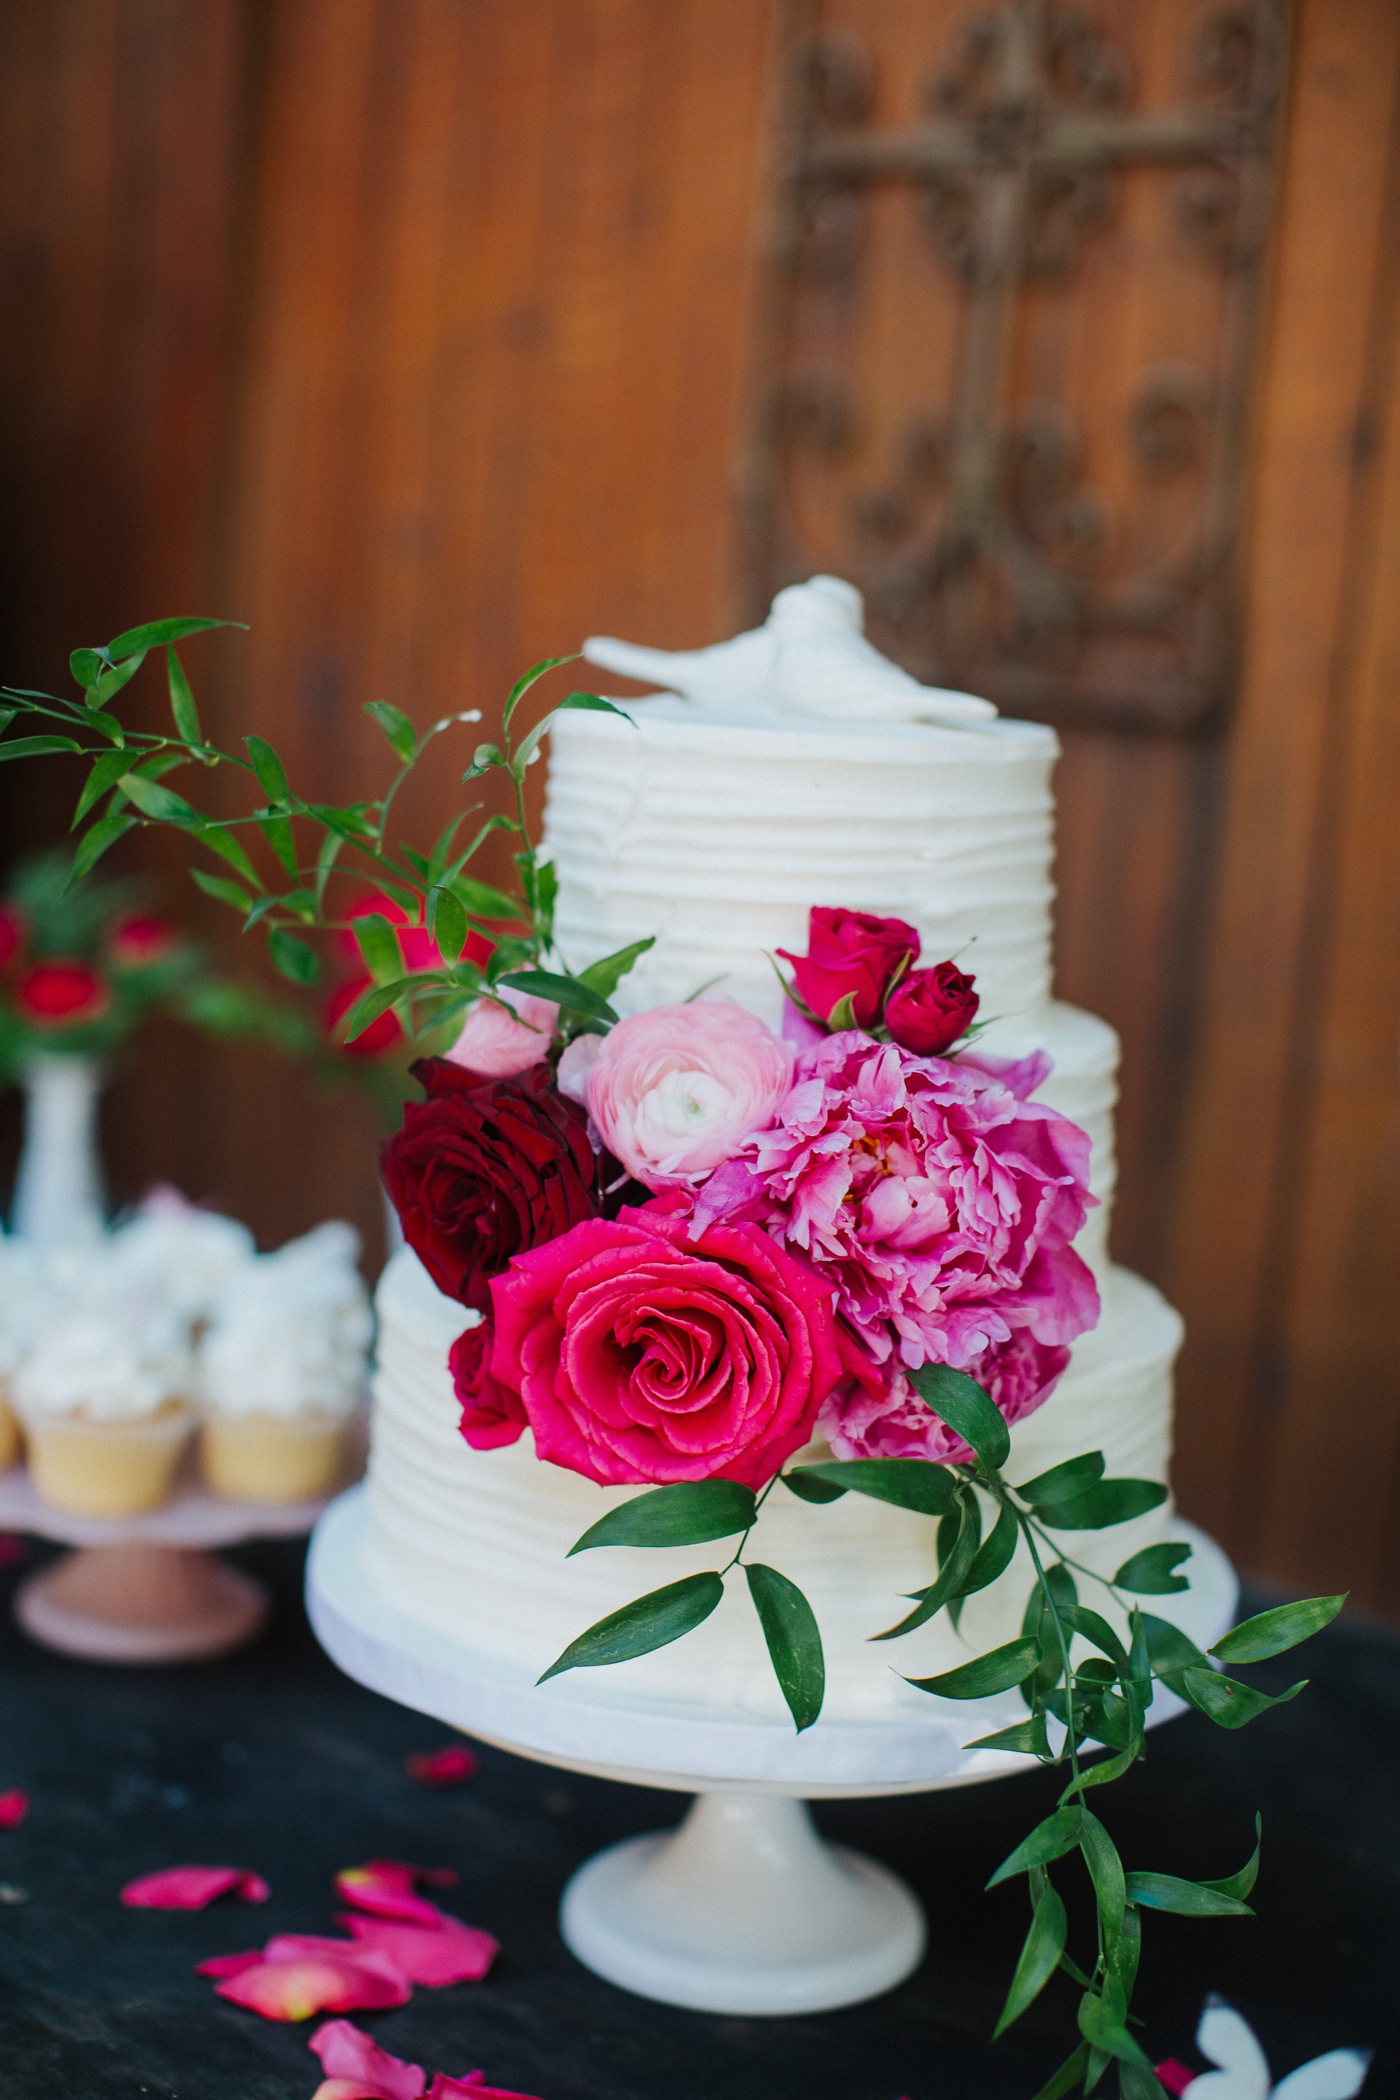 Simple white wedding cake by KM Designs